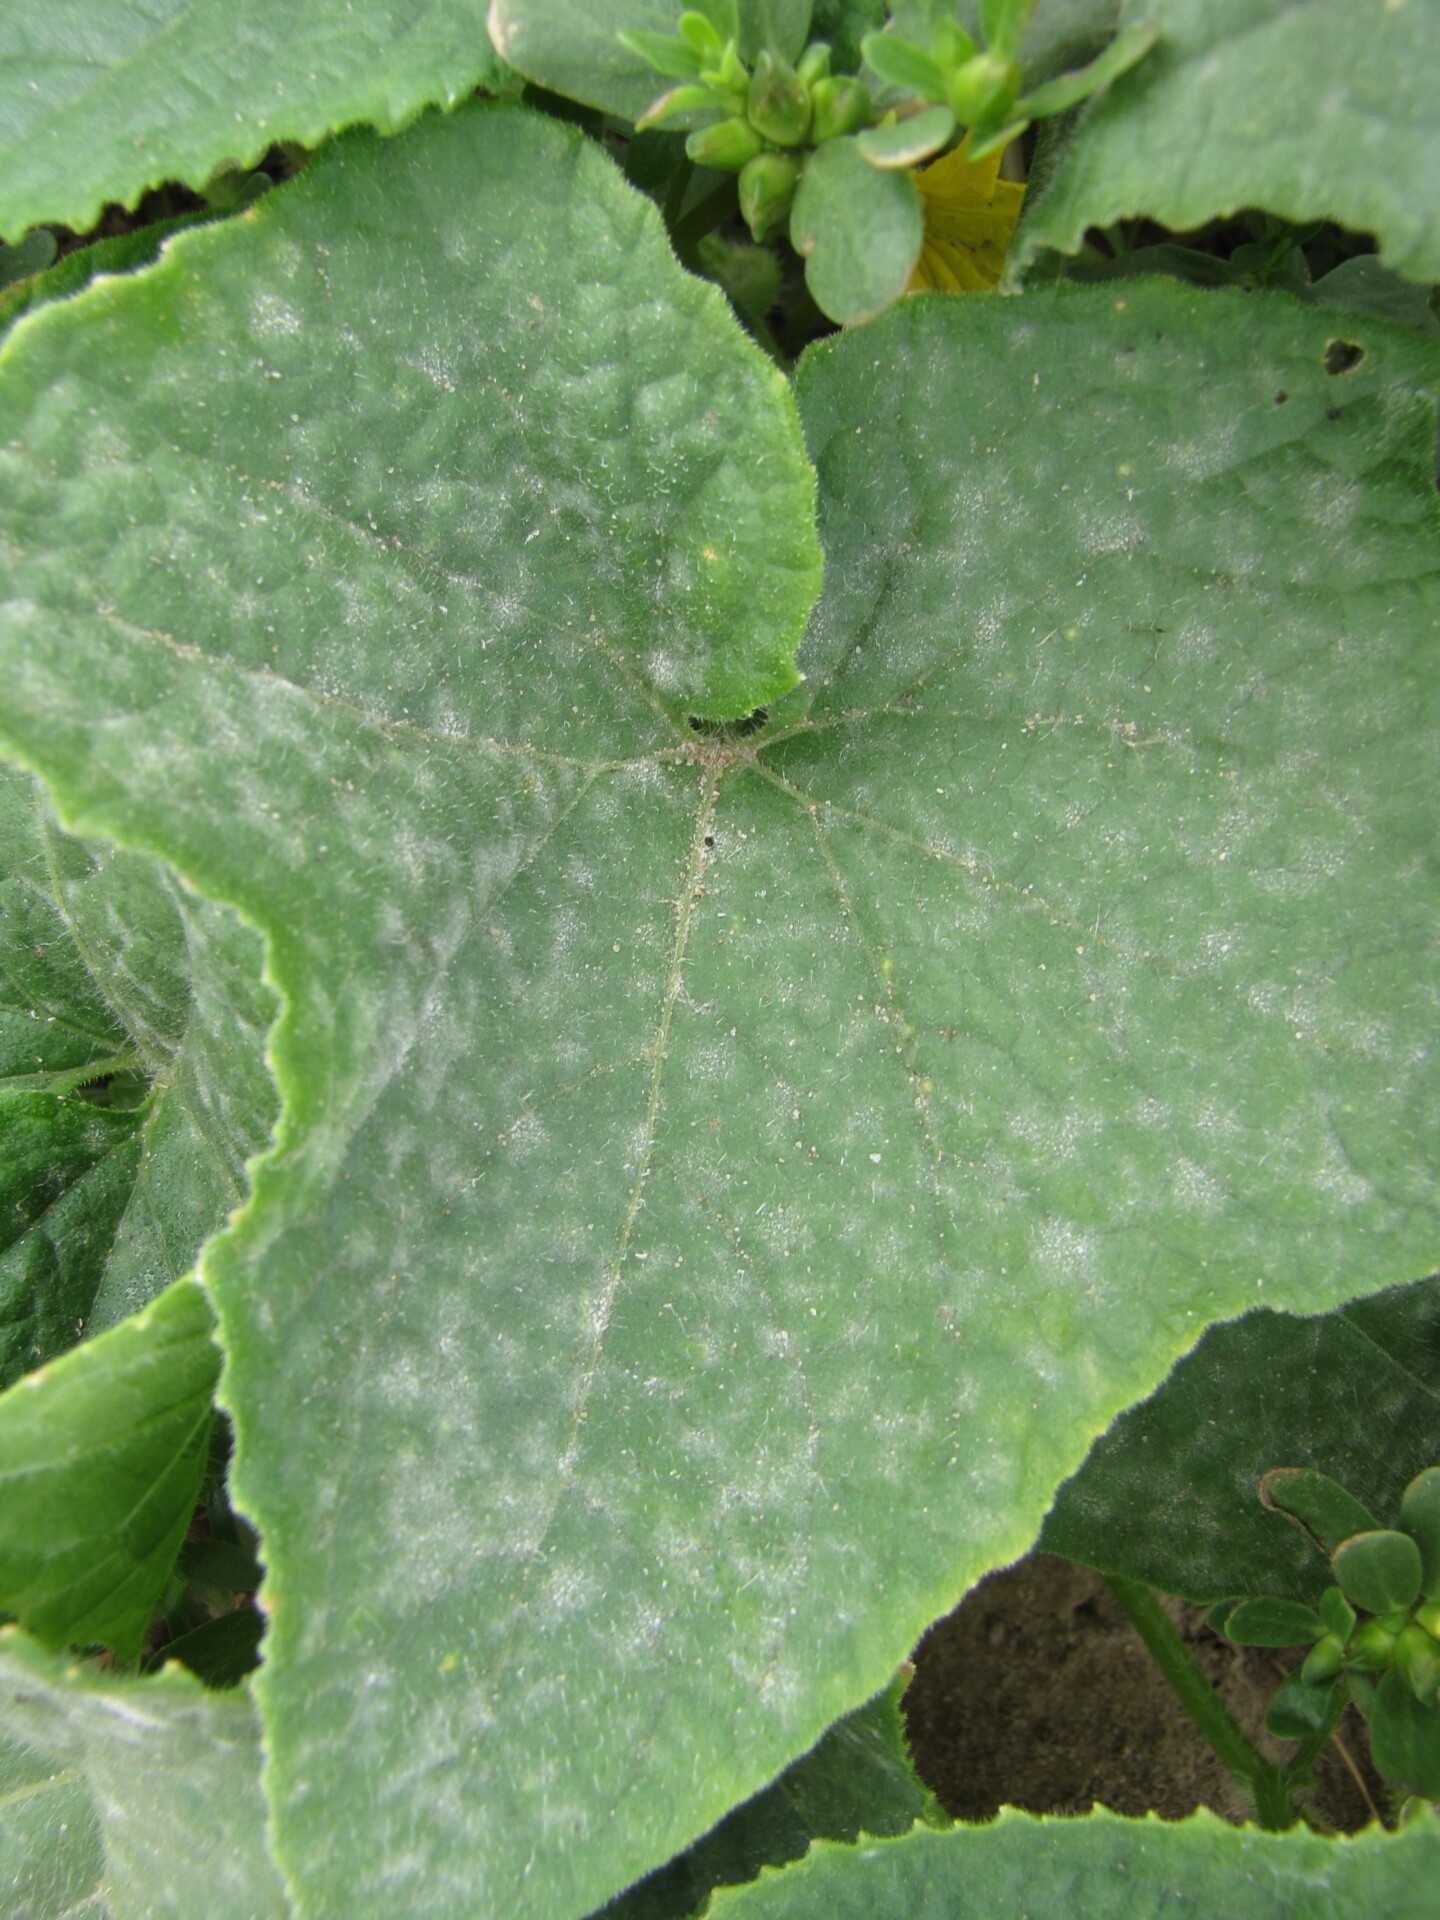  Figure 1. Powdery mildew of cucumber.